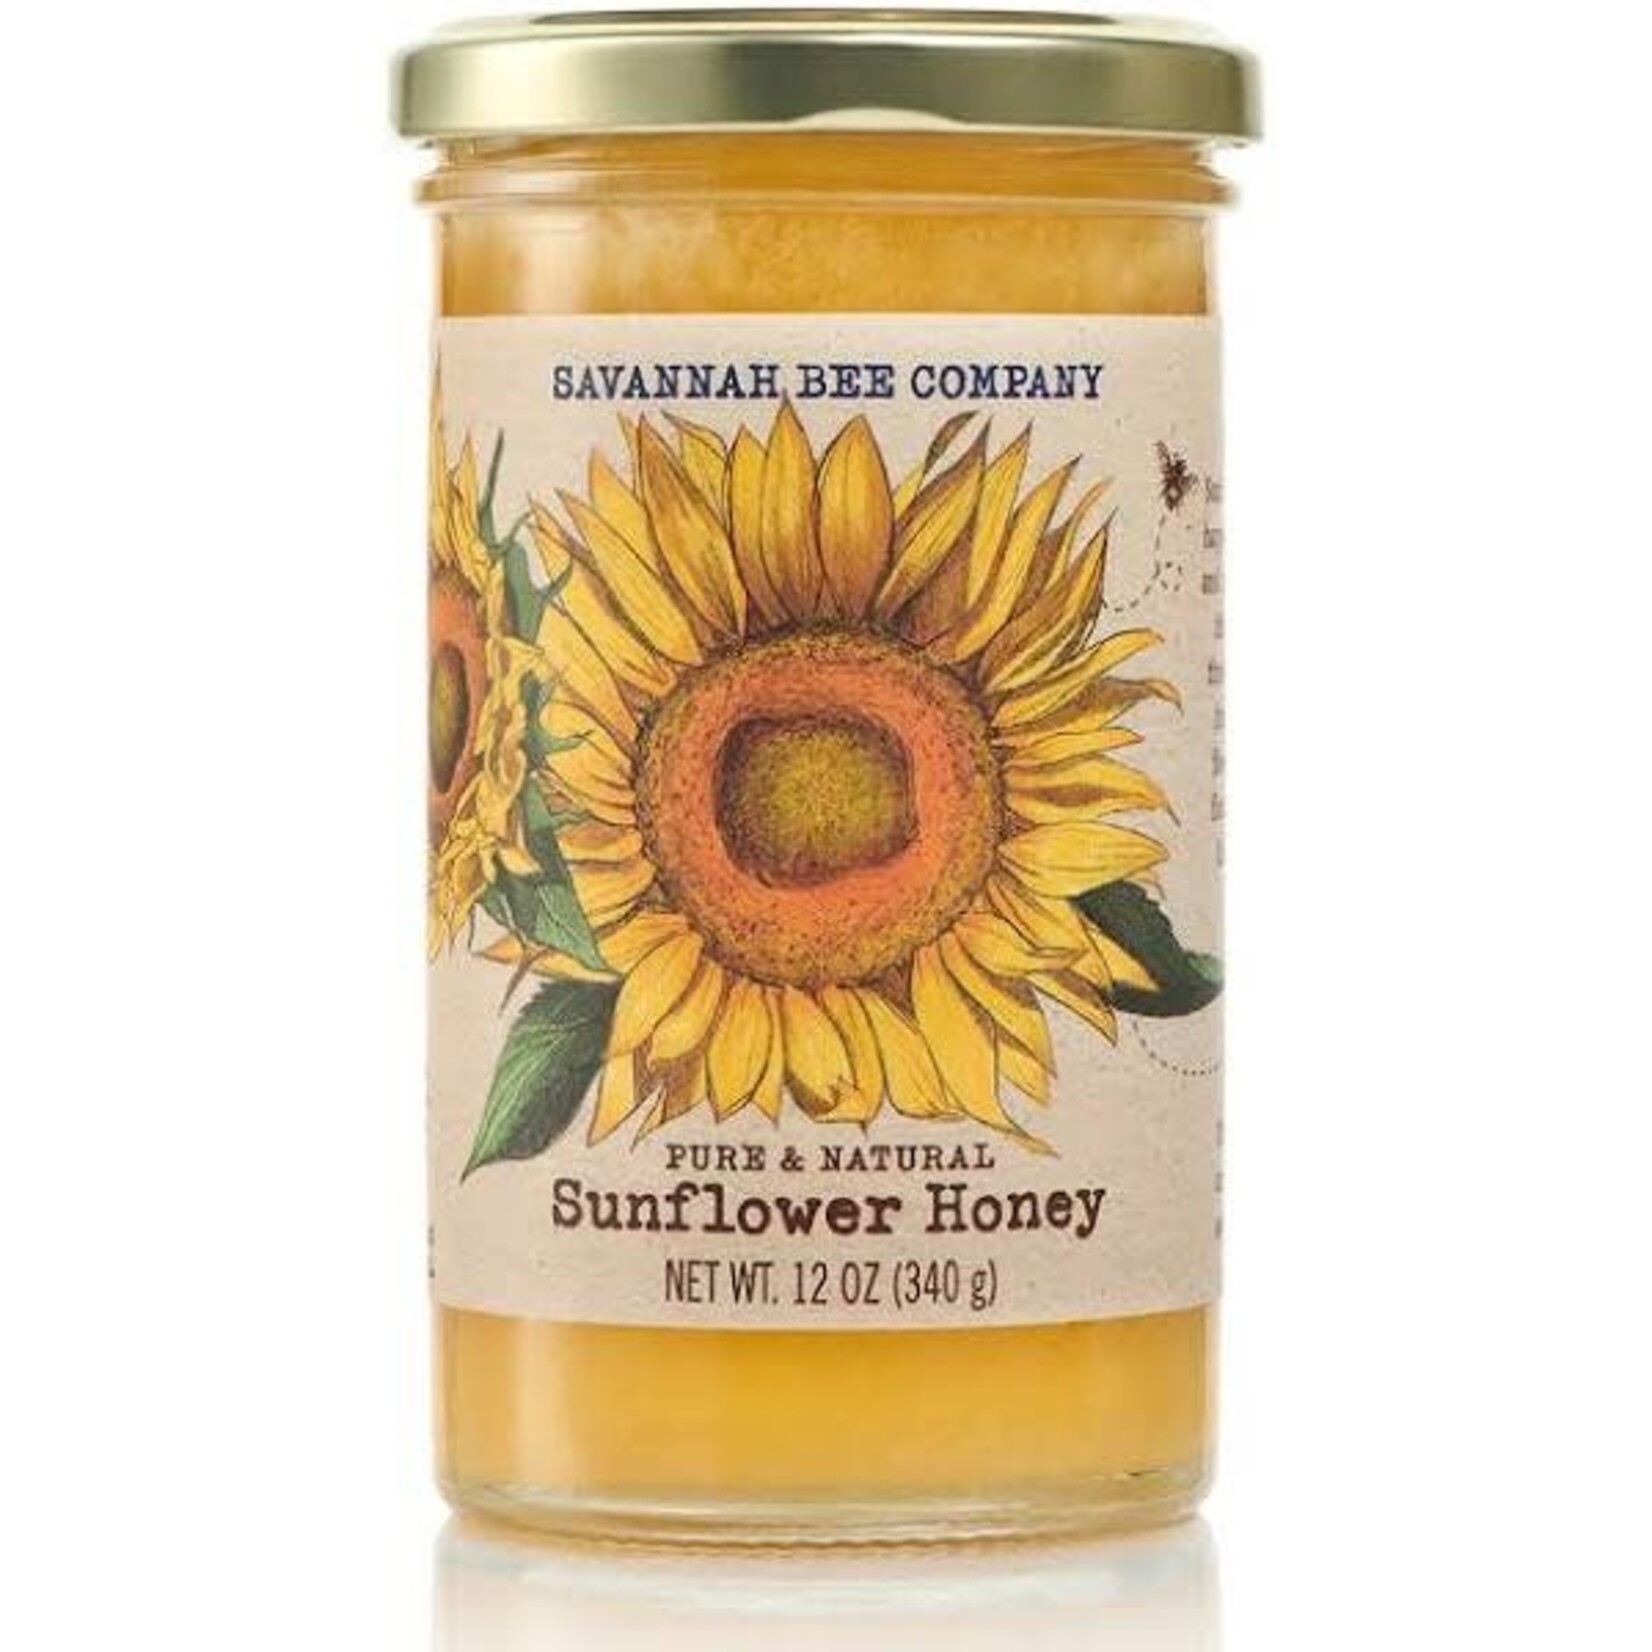 Savannah Bee Company 12 oz Sunflower Honey